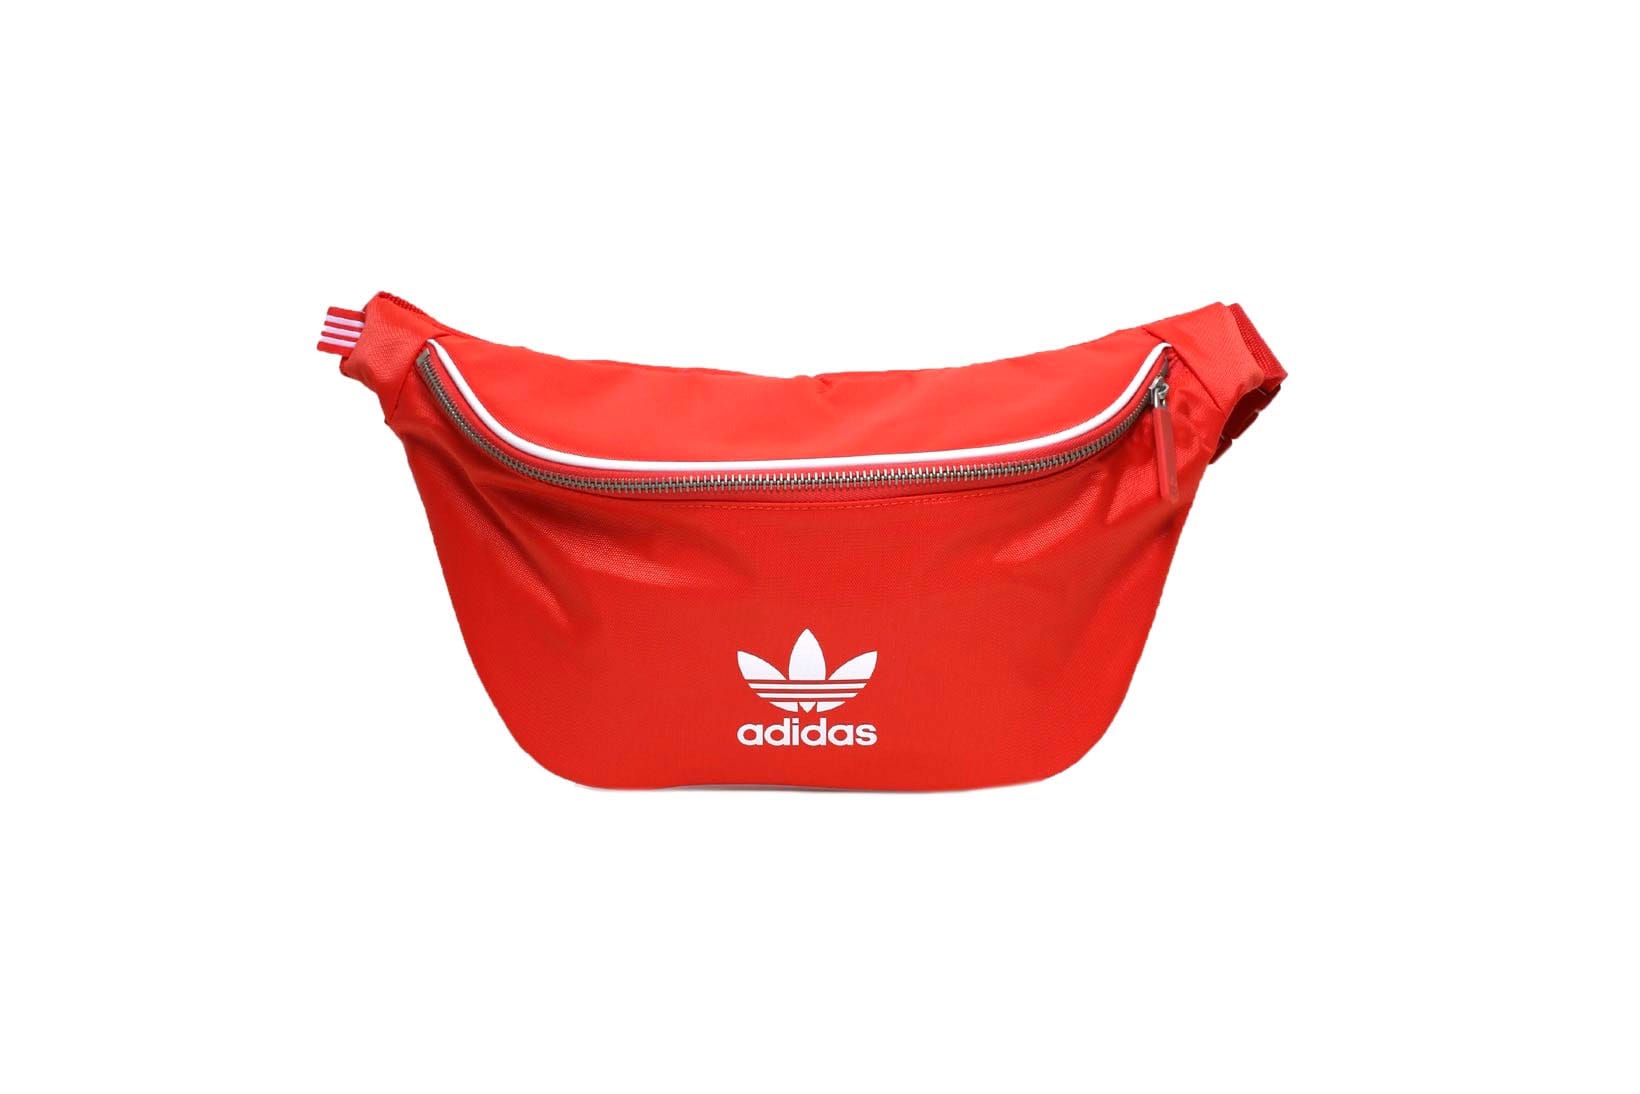 adidas red waist bag